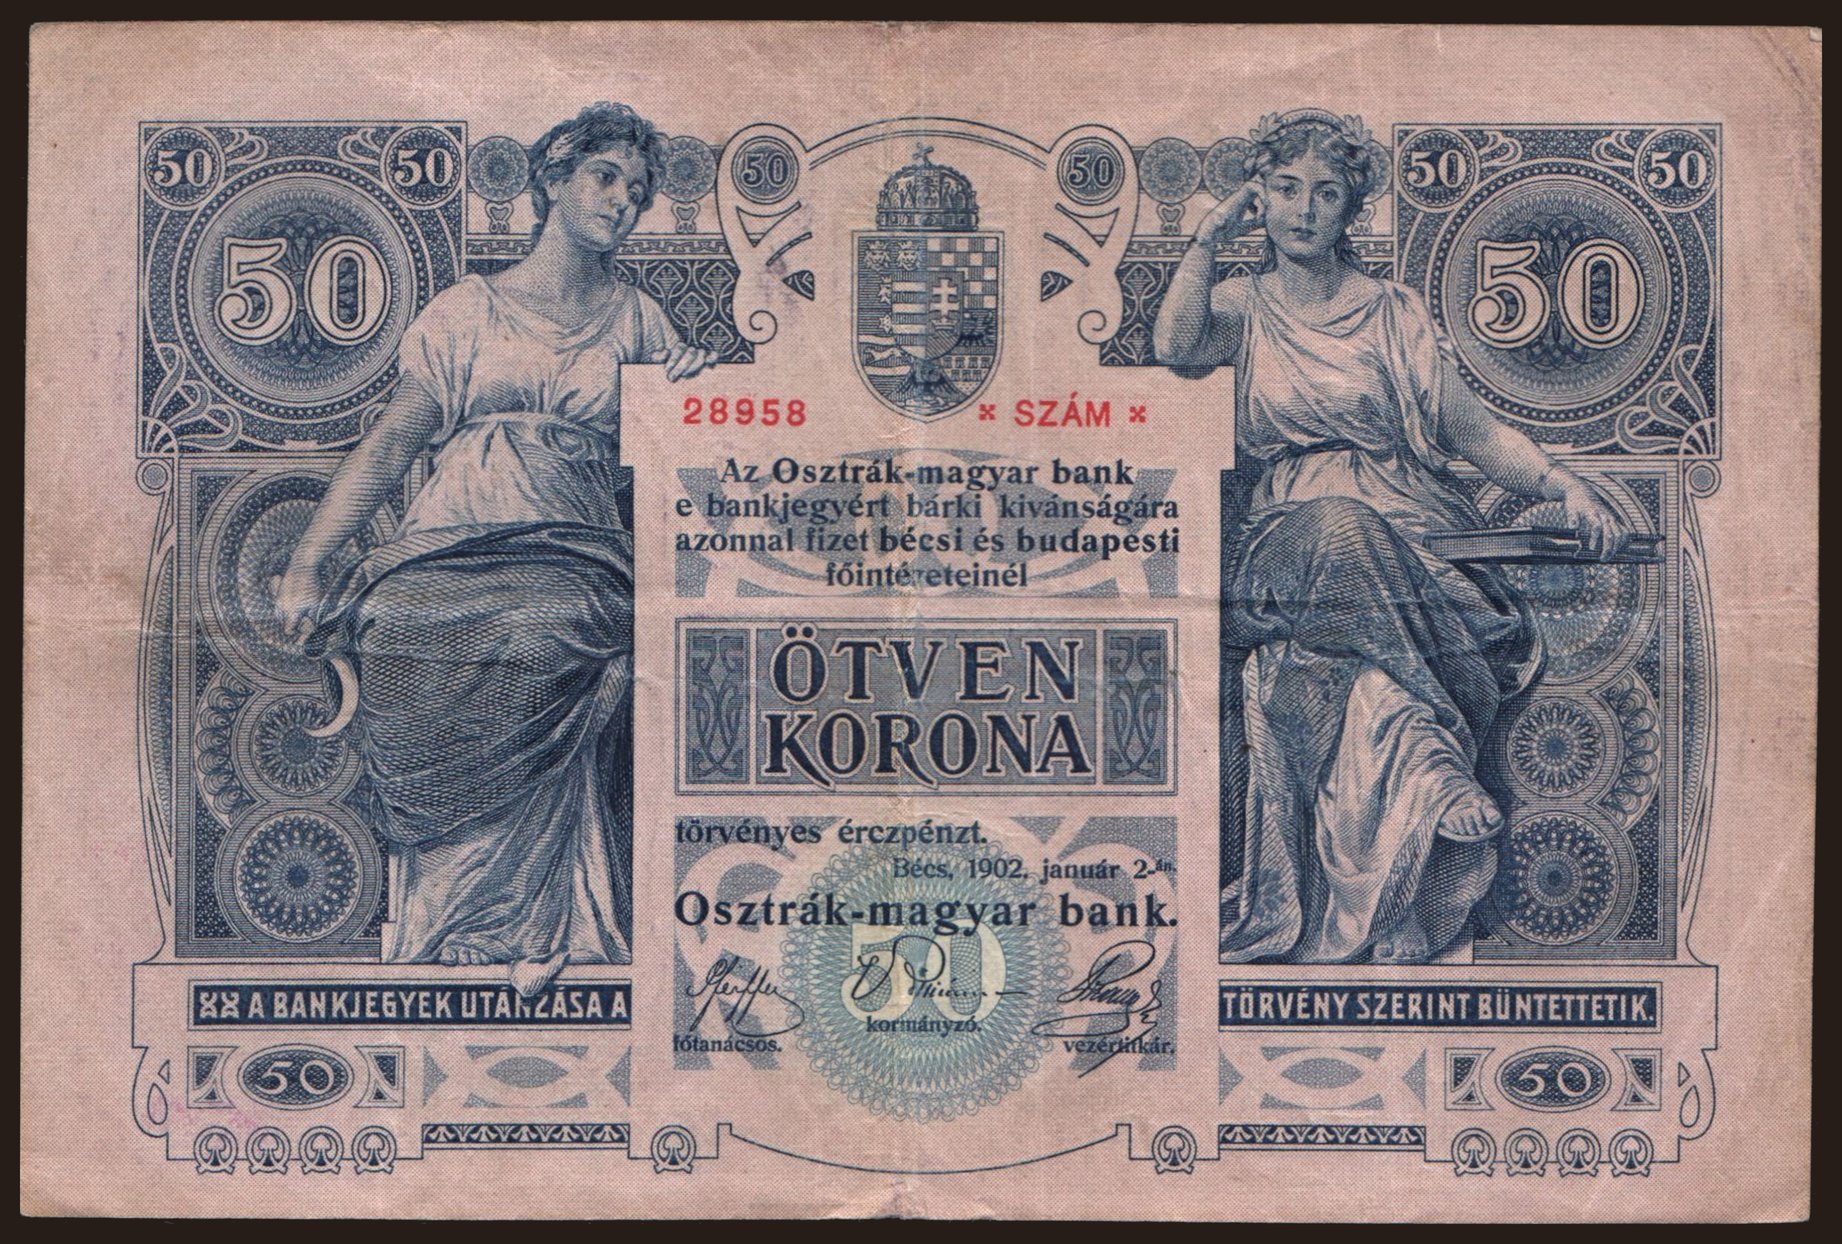 50 Kronen, 1902 | notafilia-kp.com